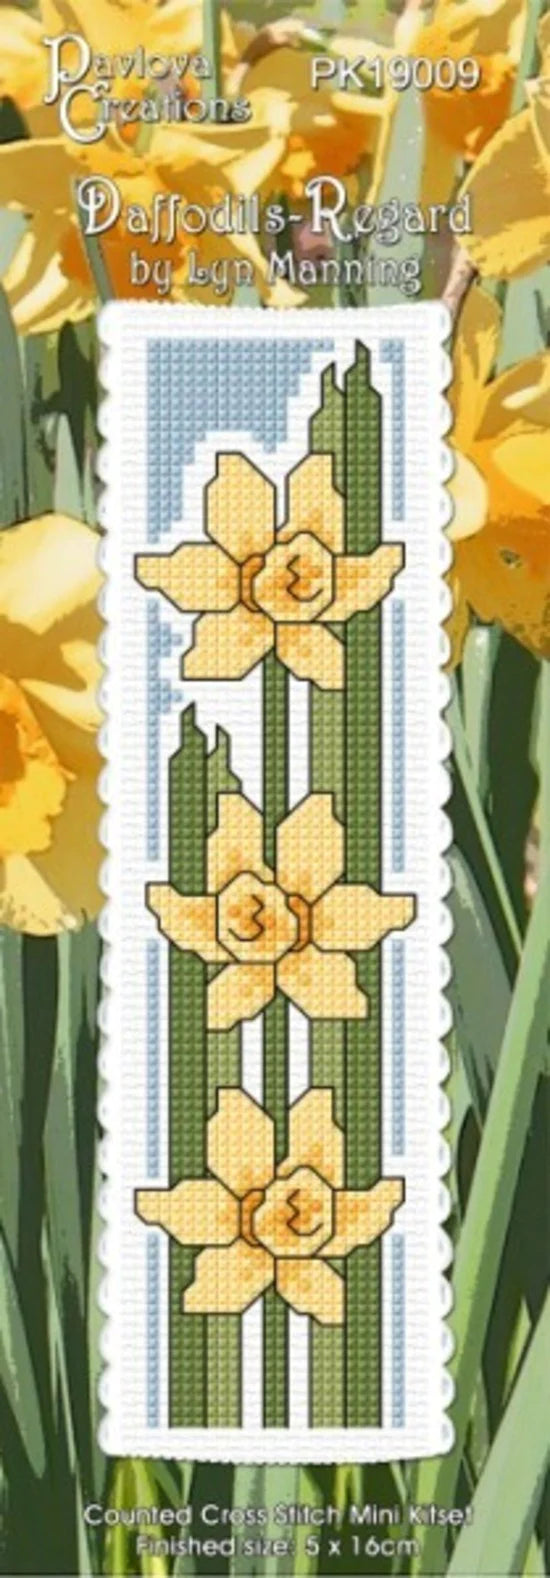 CRAFT CO CROSS-STITCH BOOKMARK KIT PK19009 Daffodils